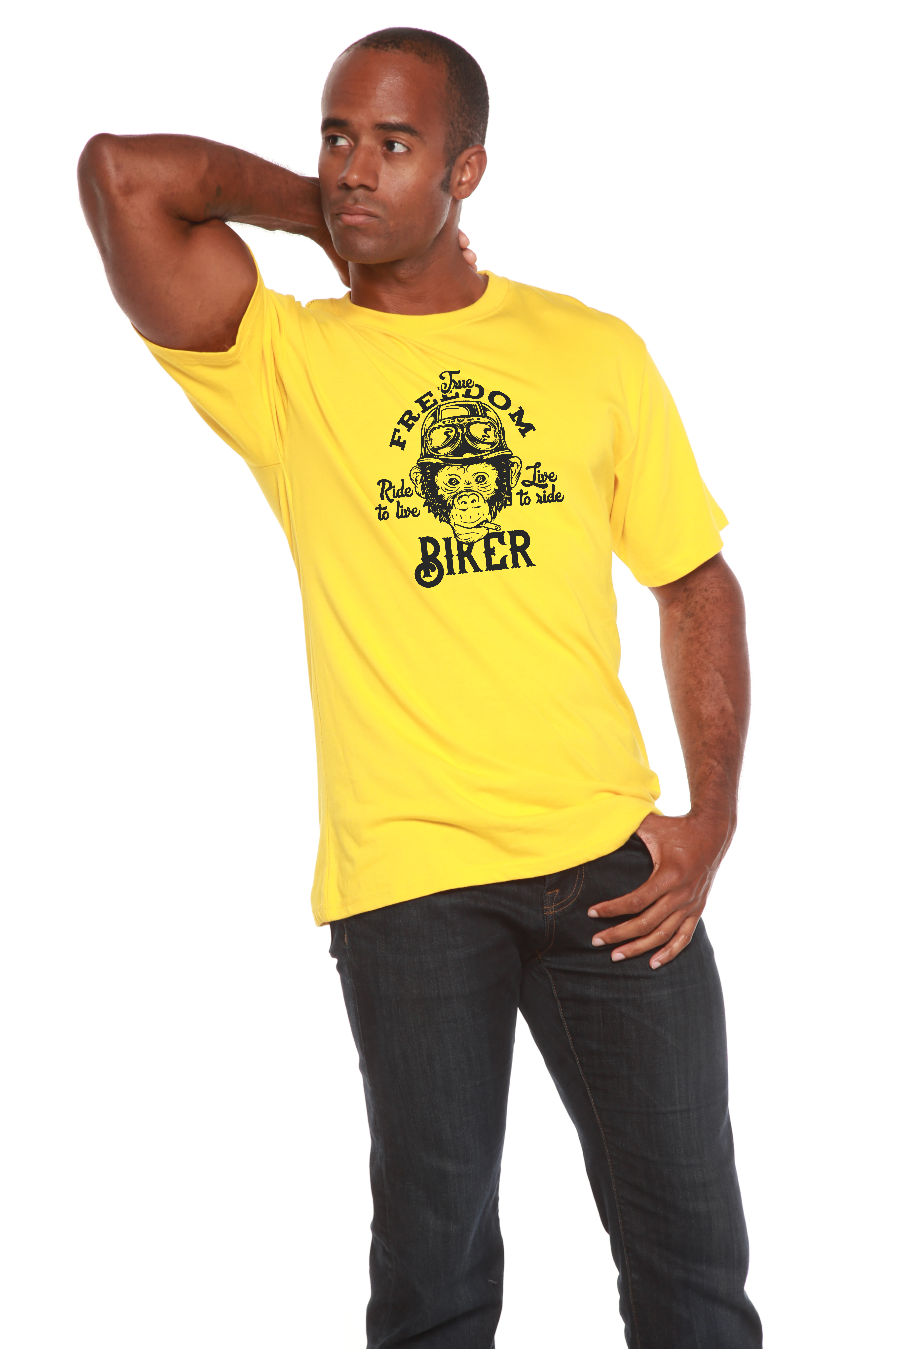 Freedom Biker Men's Bamboo Viscose/Organic Cotton Short Sleeve T-Shirt - Spun Bamboo